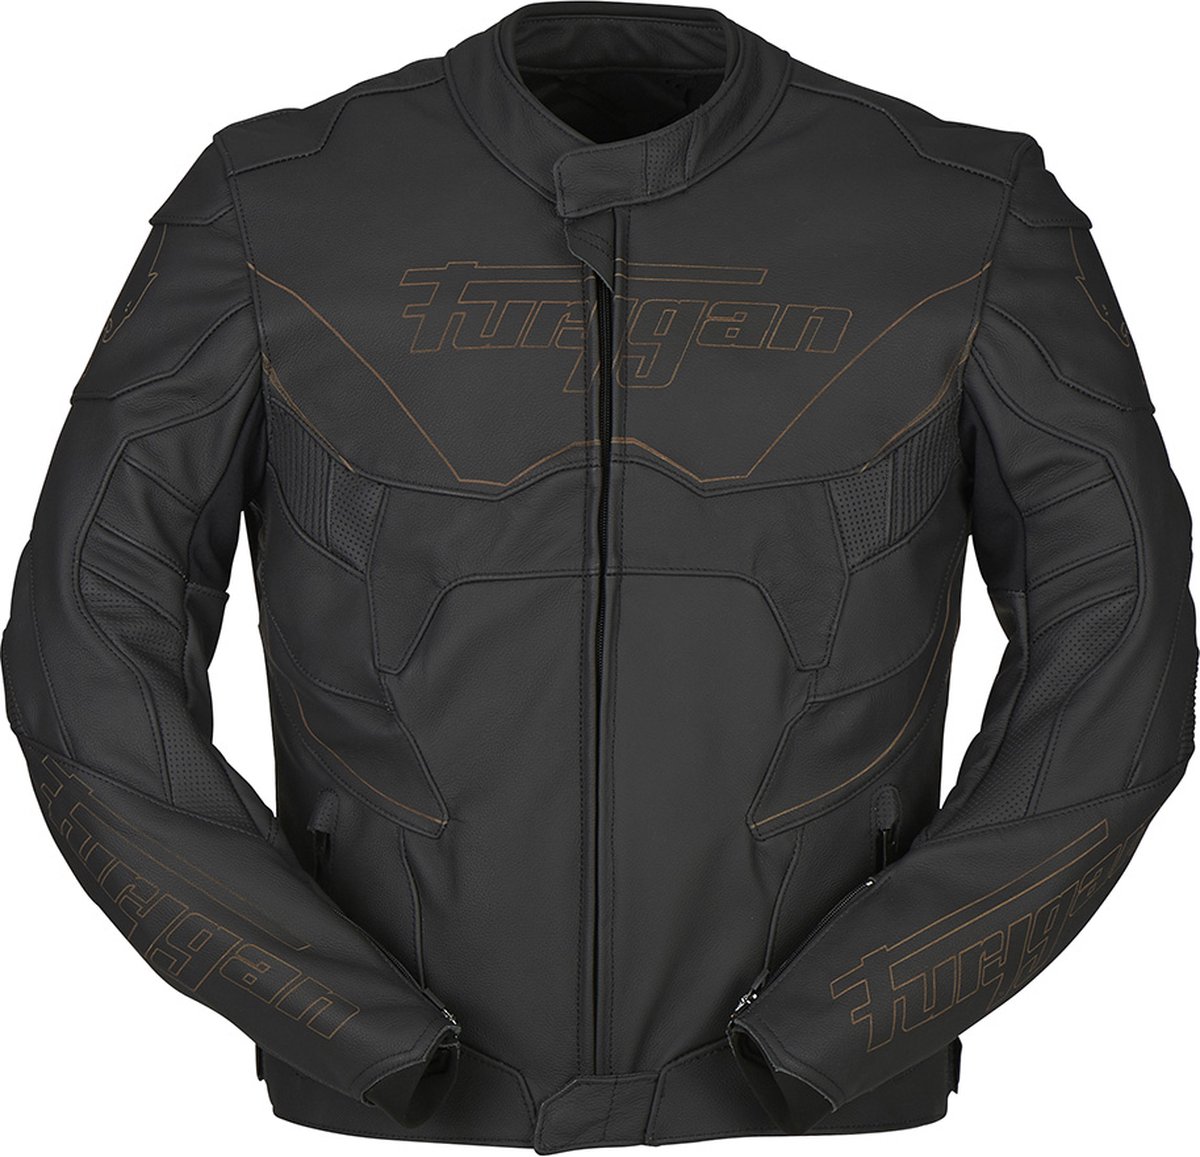 Furygan Morpheus Black Motorcycle Jacket 3XL